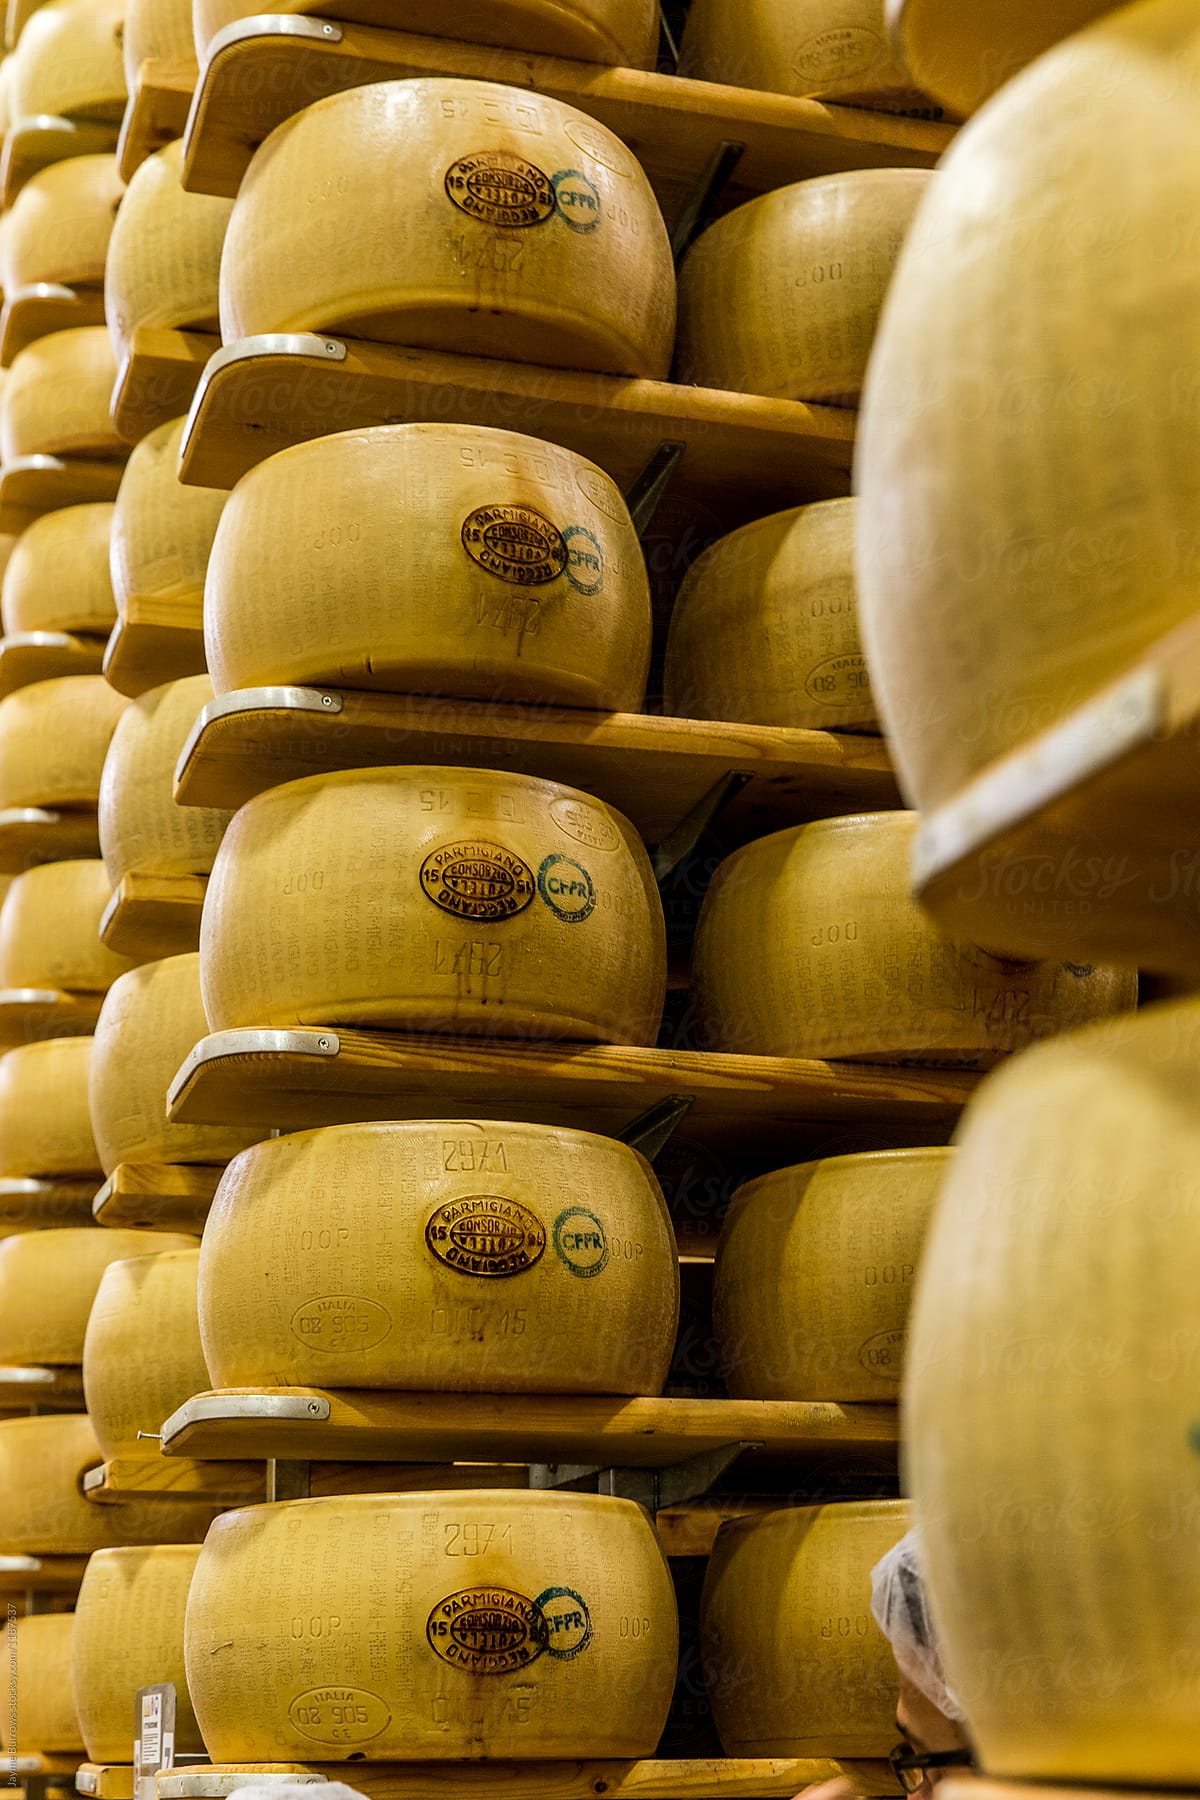 The whole cheese wheel cracking 😍 #cheesetok #parmigiano